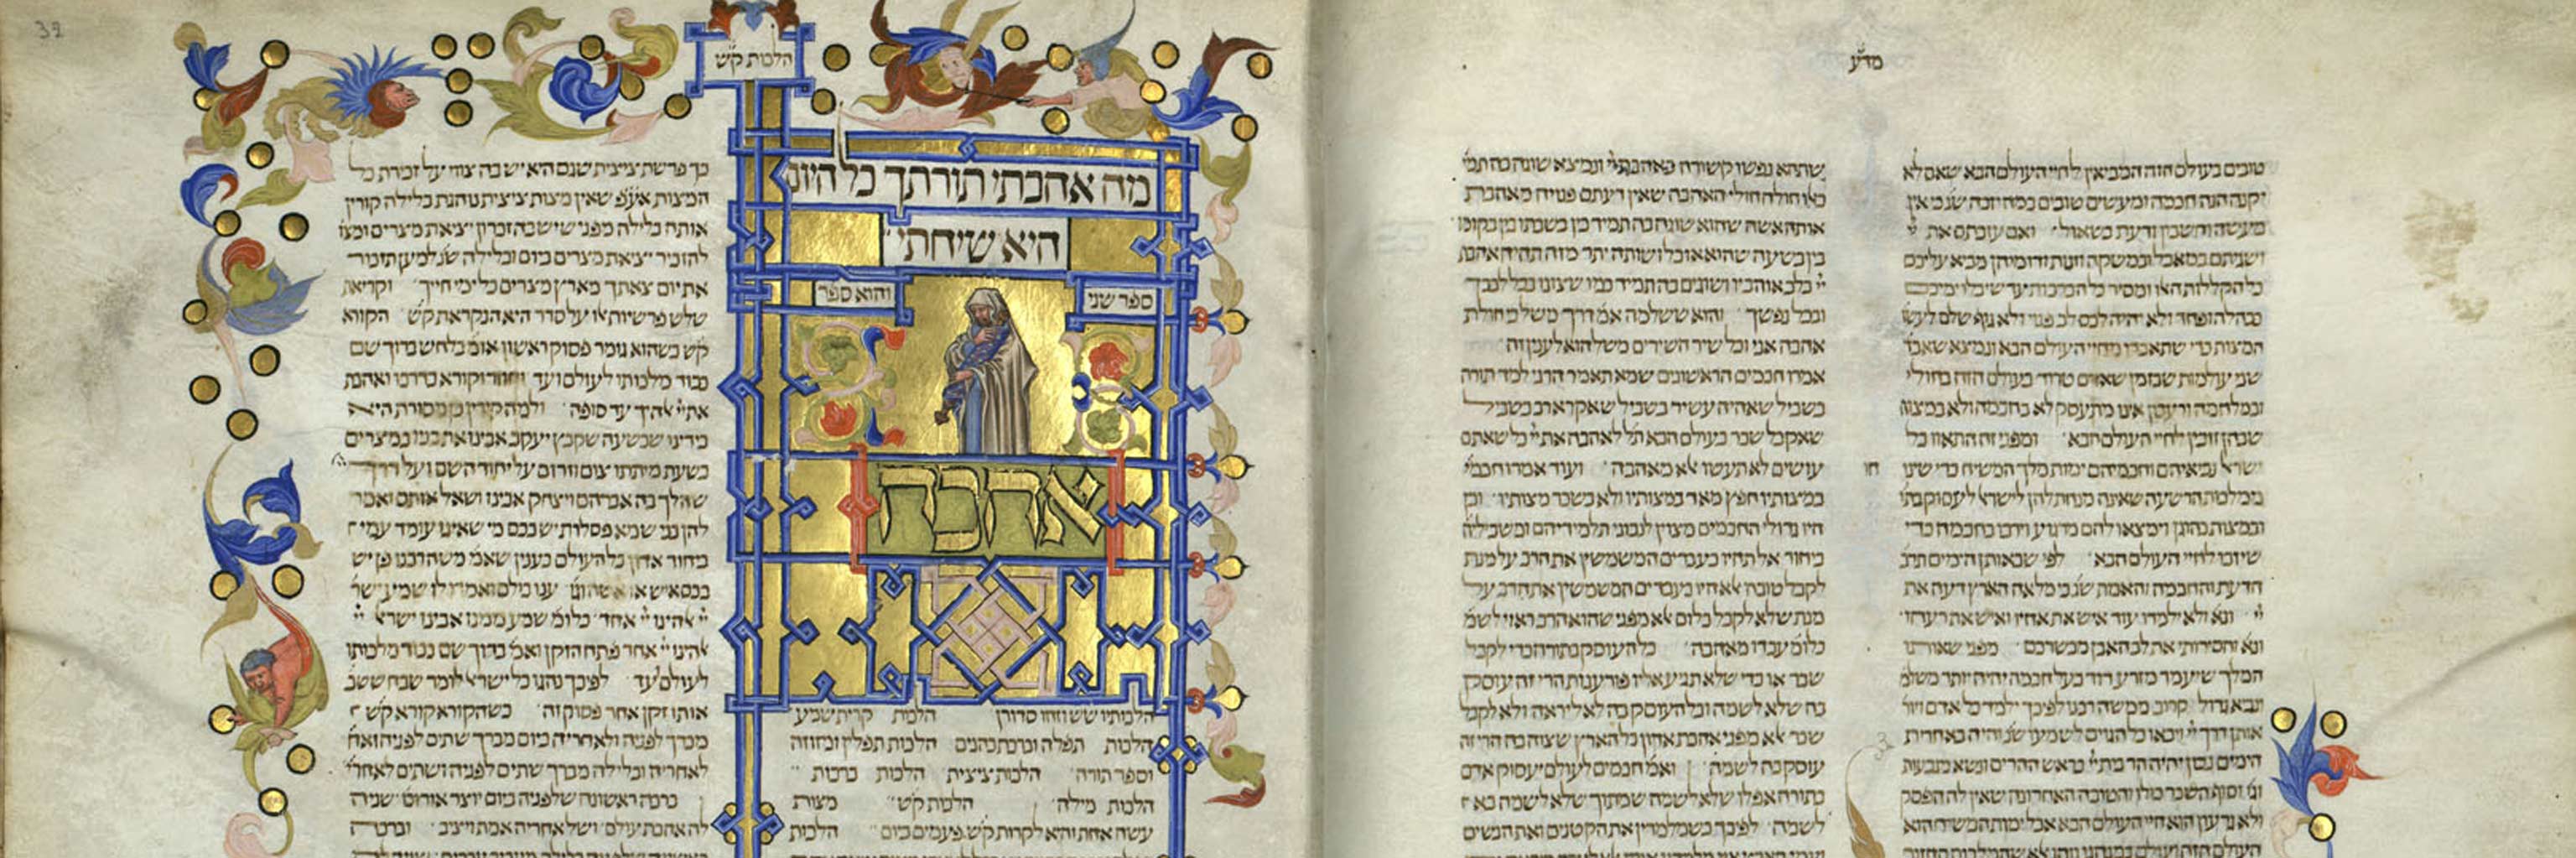 Highly decorated historic Jewish manuscript.